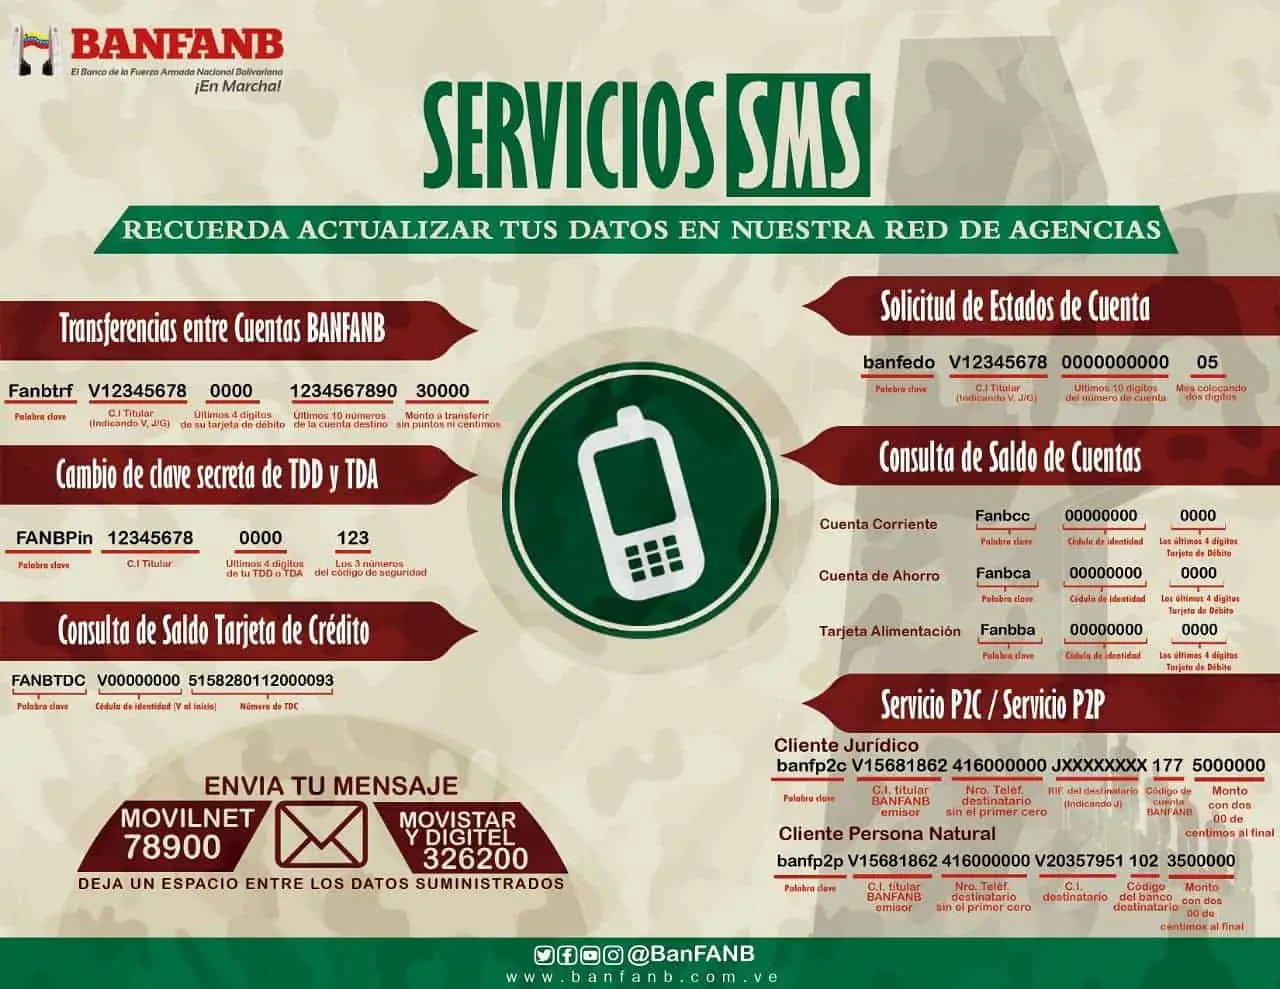 Servicios SMS BANFANB